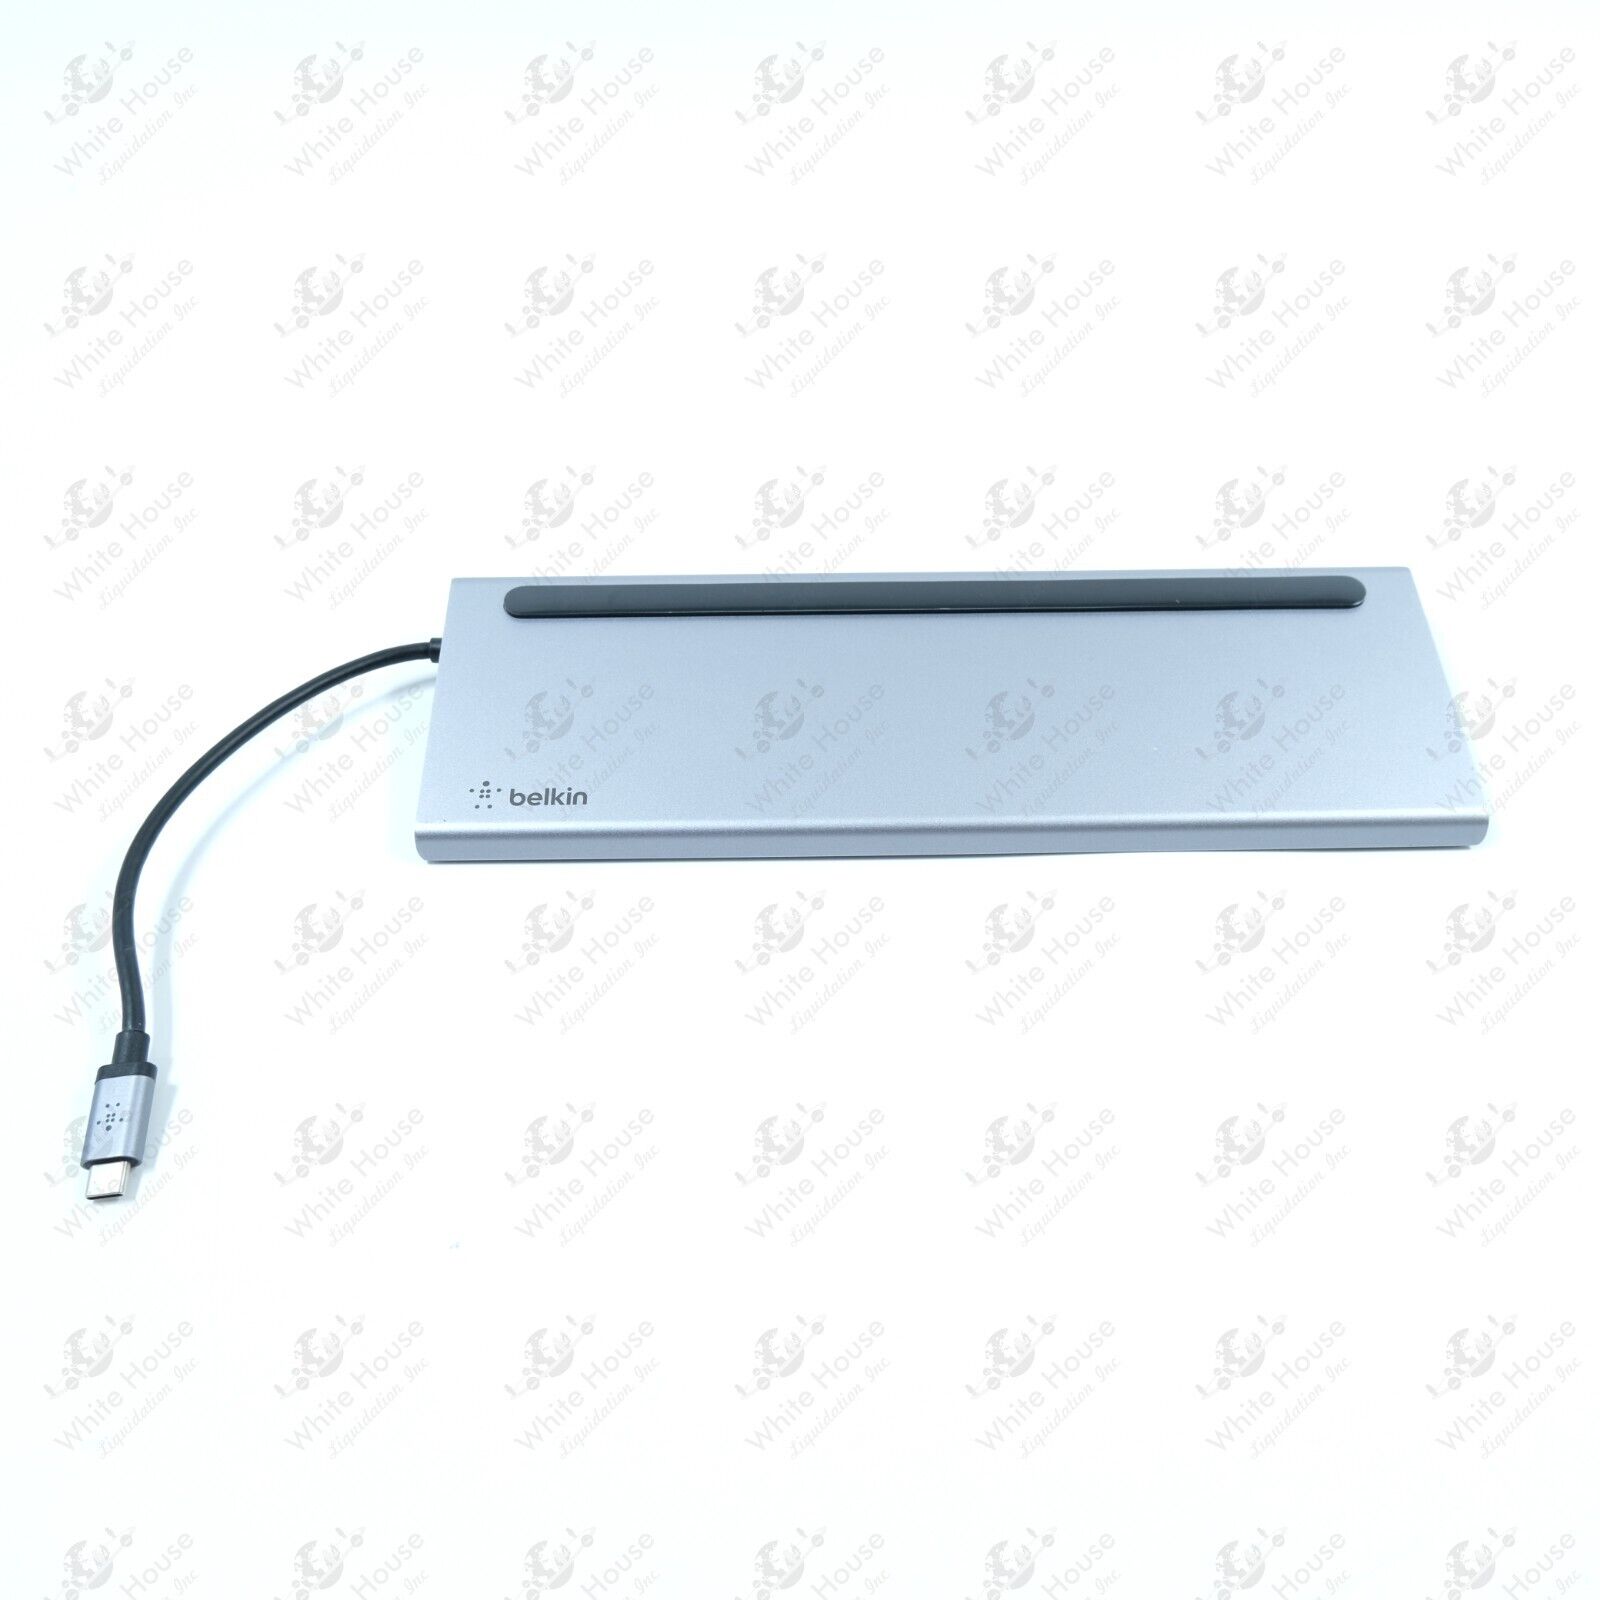 Belkin - USB-C 11-in-1 Multiport Dock - Gray